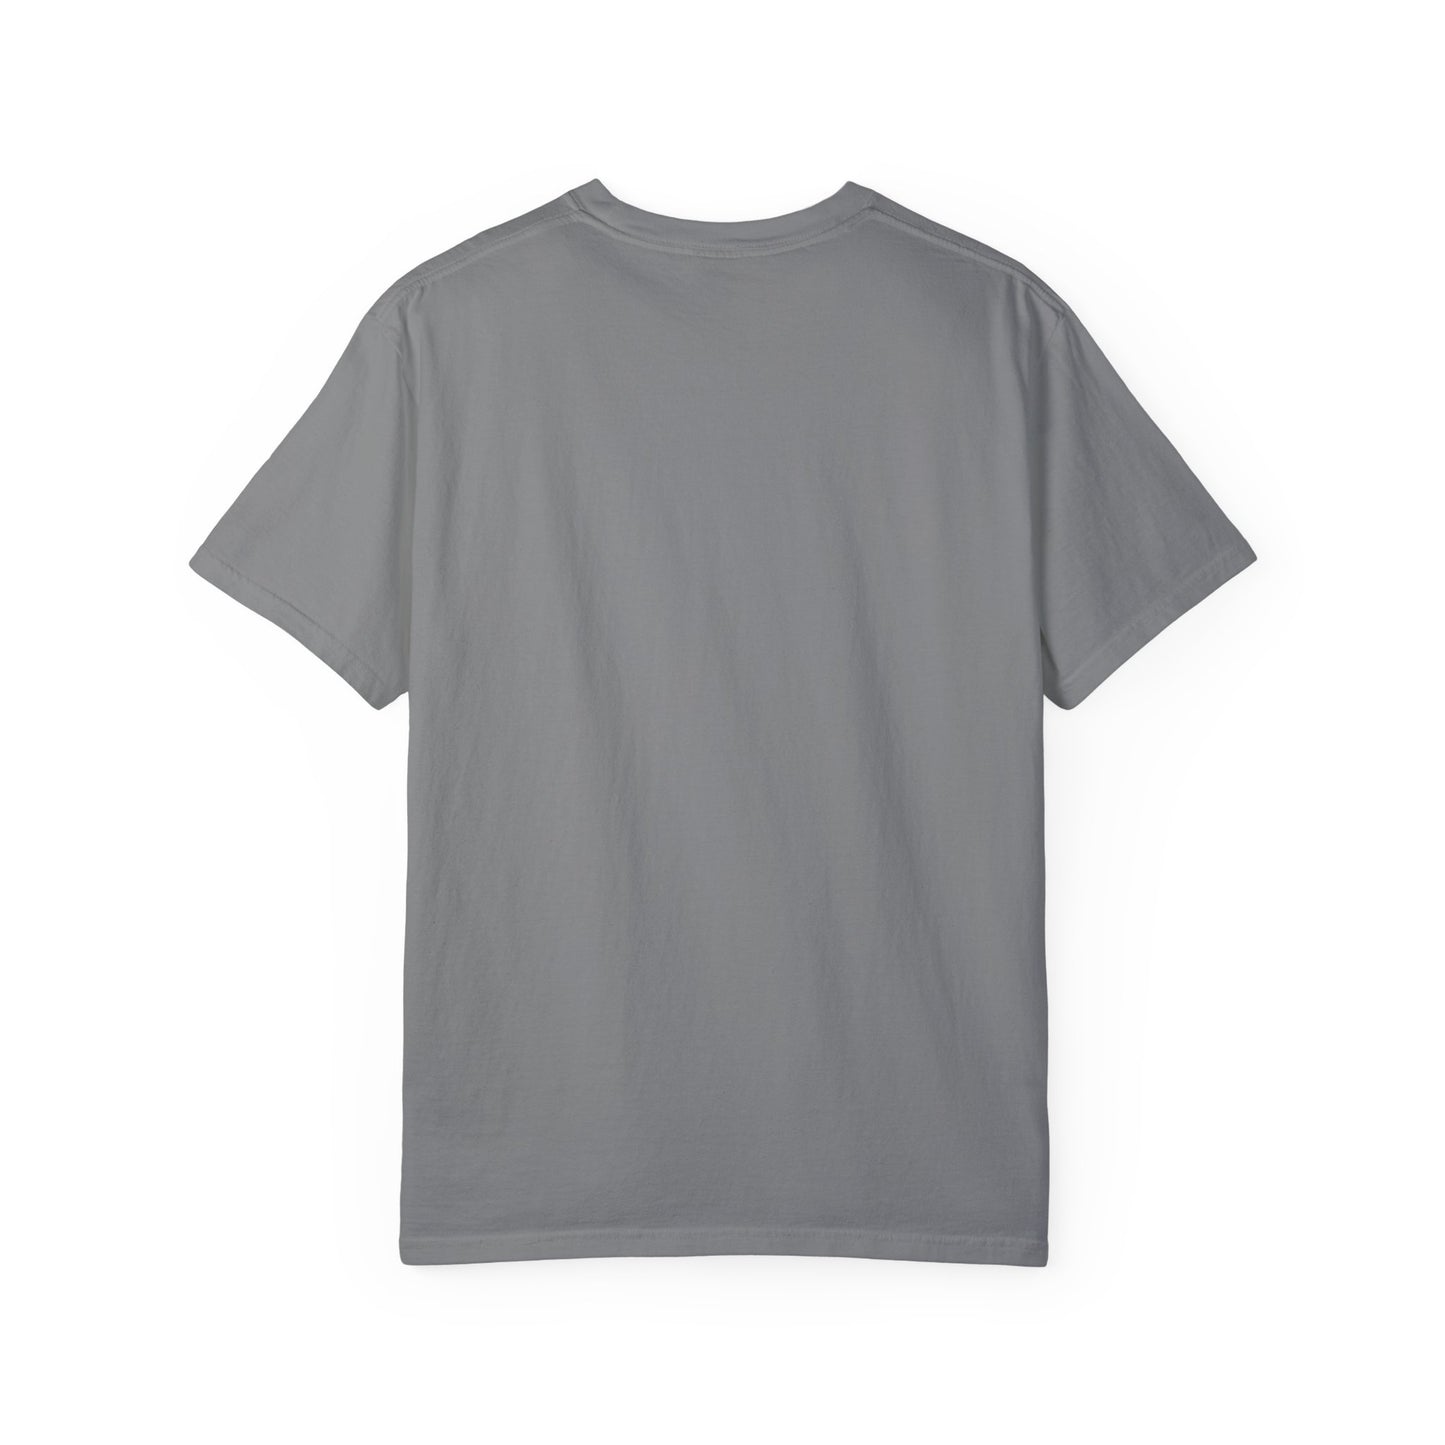 Shhh, just, Shhh - Unisex Garment-Dyed T-shirt